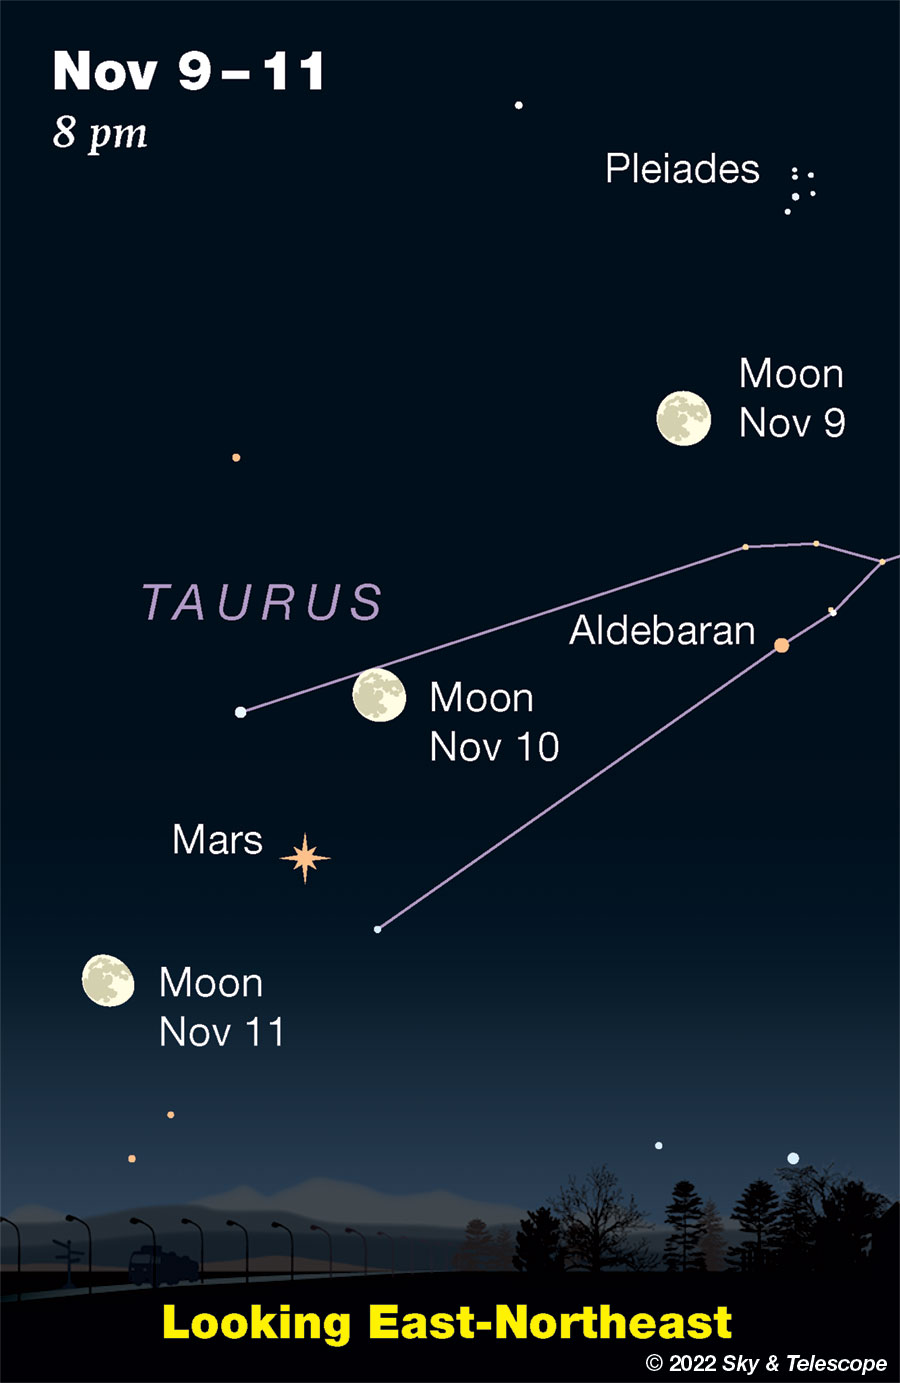 Moon passing the Pleiades, Aldebaran, Mars, and the horns of Taurus, Nov 9-11, 2022